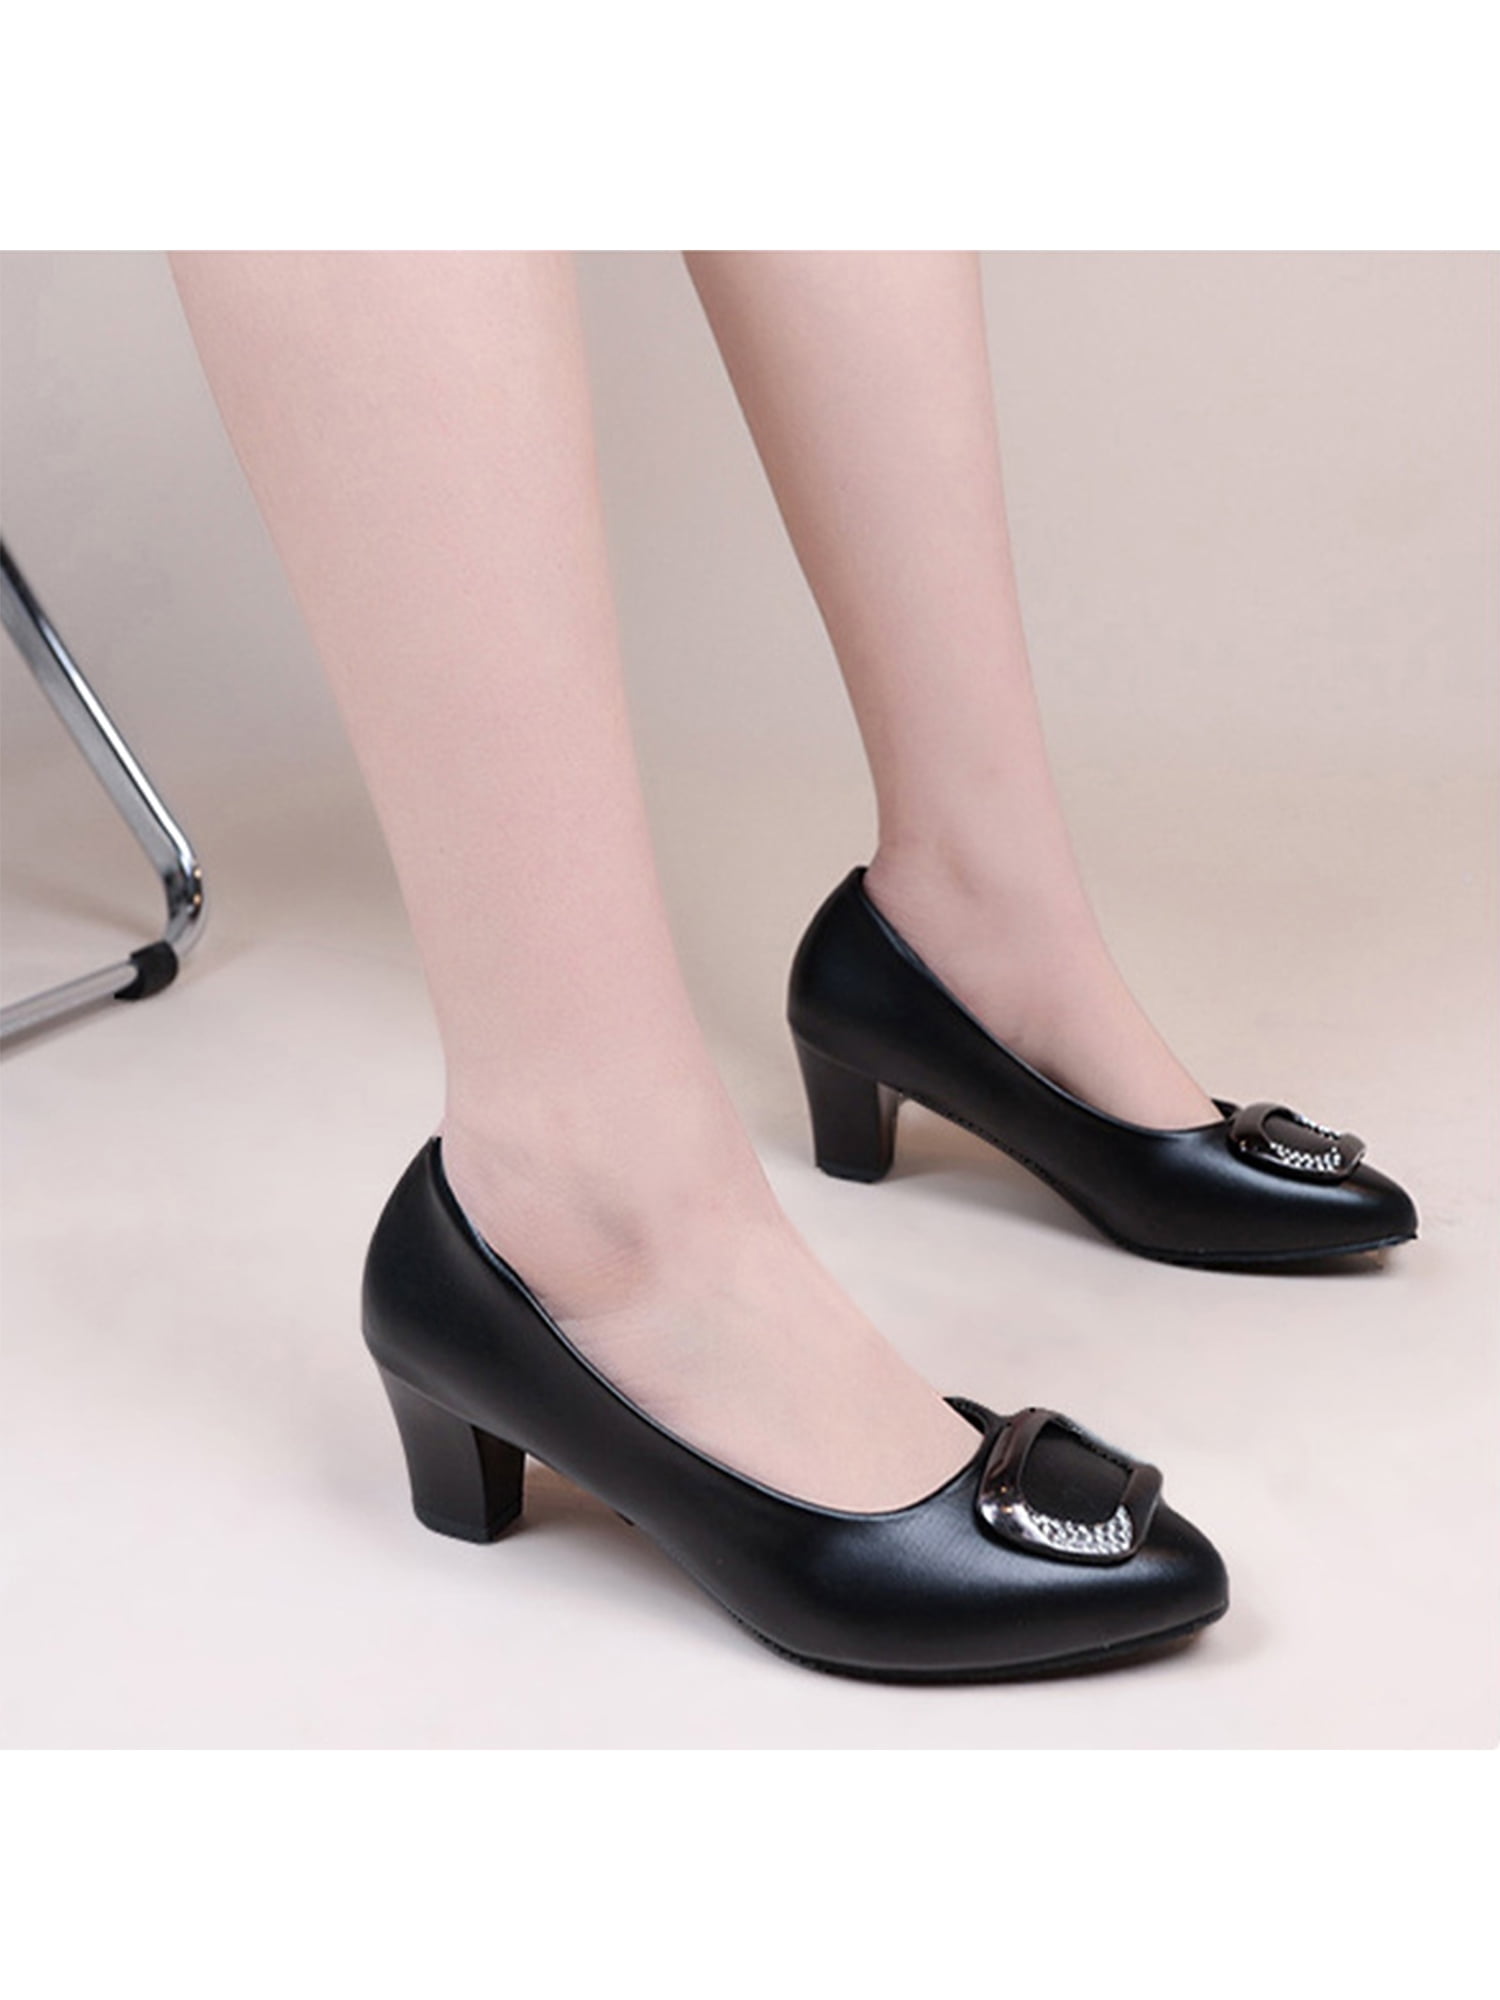 Pointy heel black pumps | Black pump shoes, Pumps, Heels